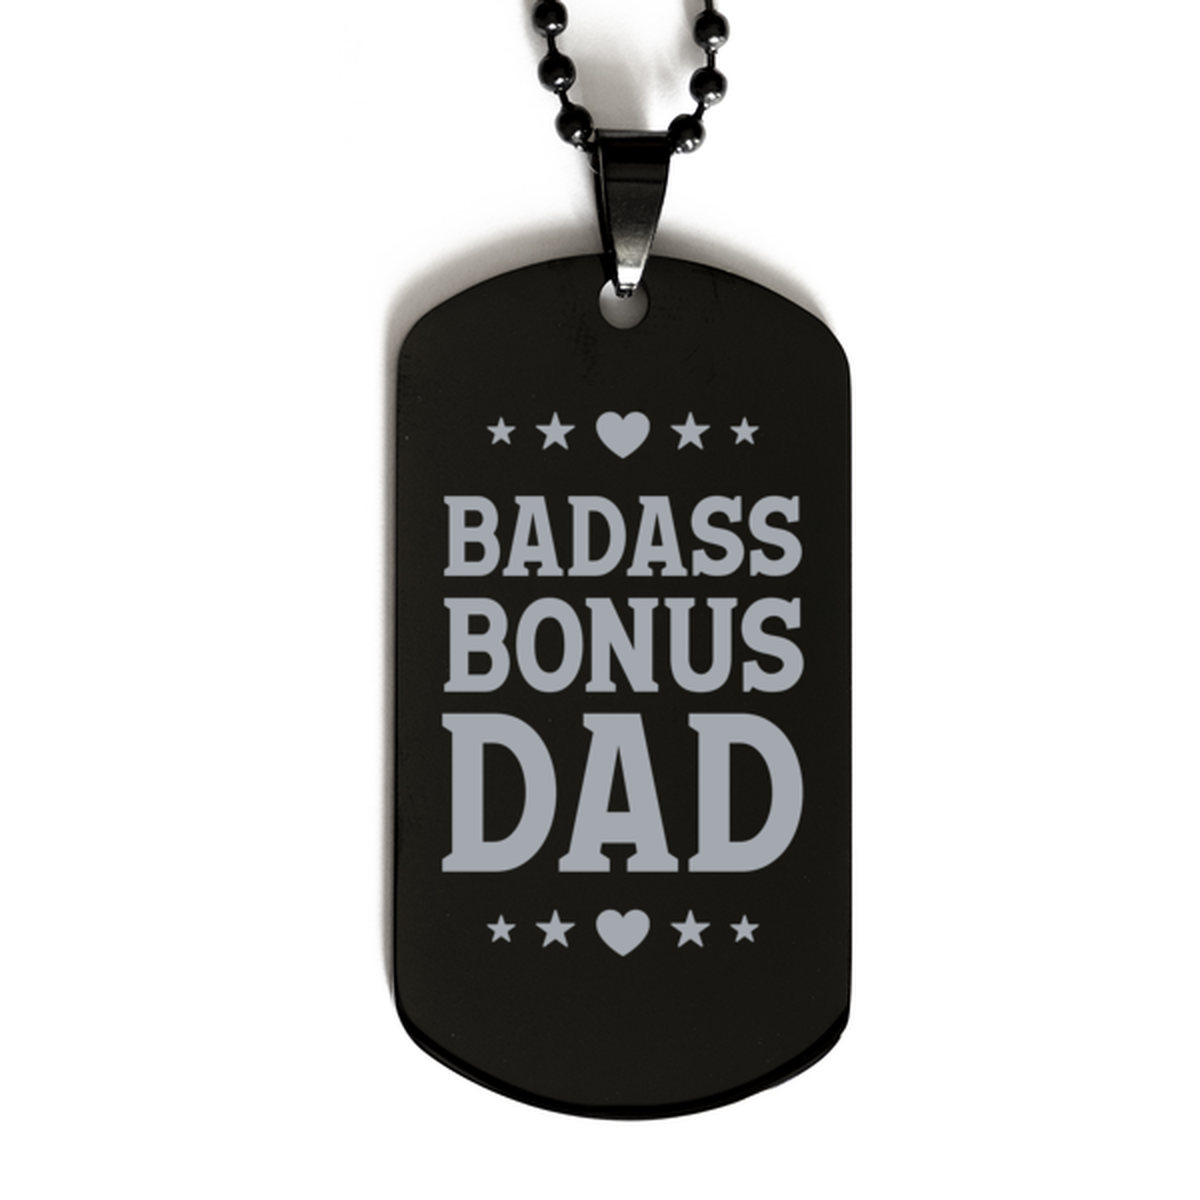 Bonus Dad Black Dog Tag, Badass Bonus Dad, Funny Family Gifts  Necklace For Bonus Dad From Son Daughter